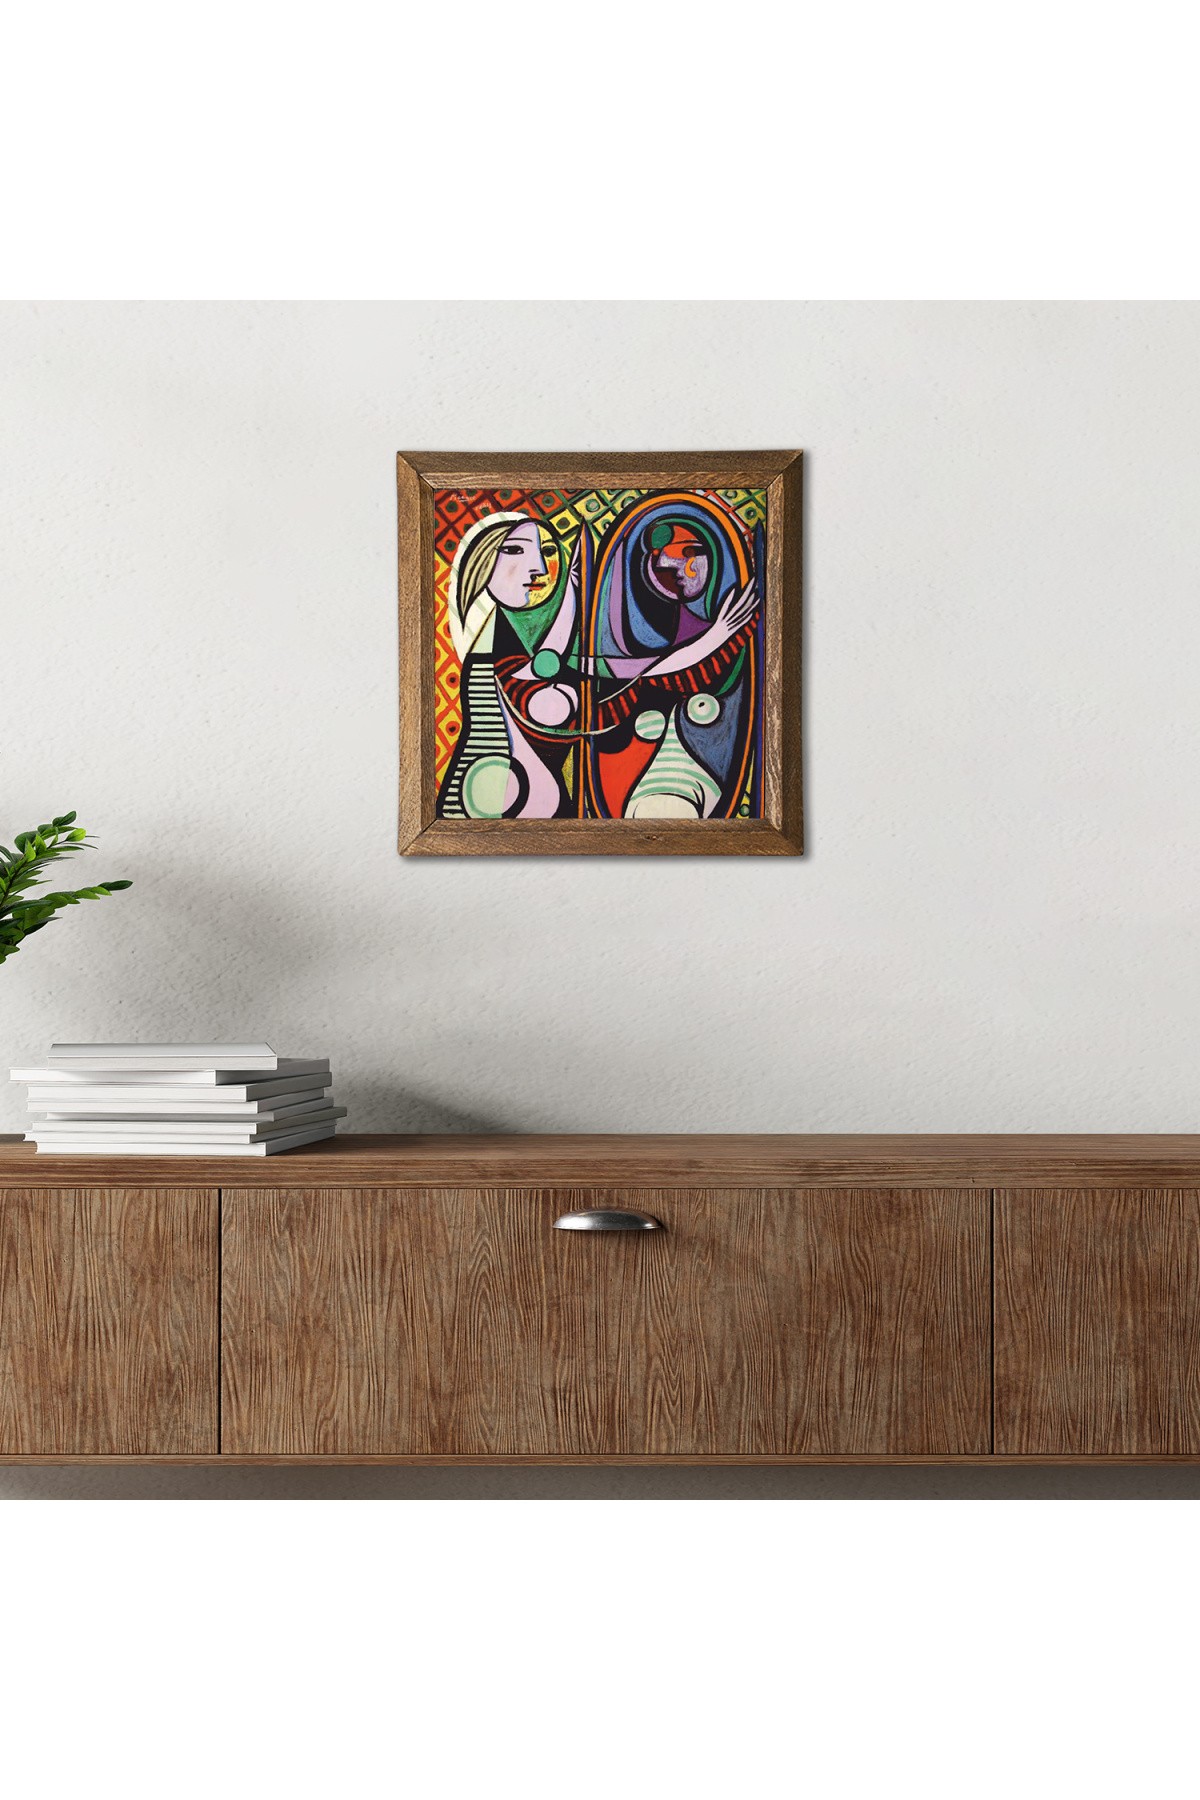 Pablo Picasso Ayna Karşısındaki Kız Taş Duvar Tablosu Ahşap Çerçeveli Duvar Dekoru Wall Art 25x25cm